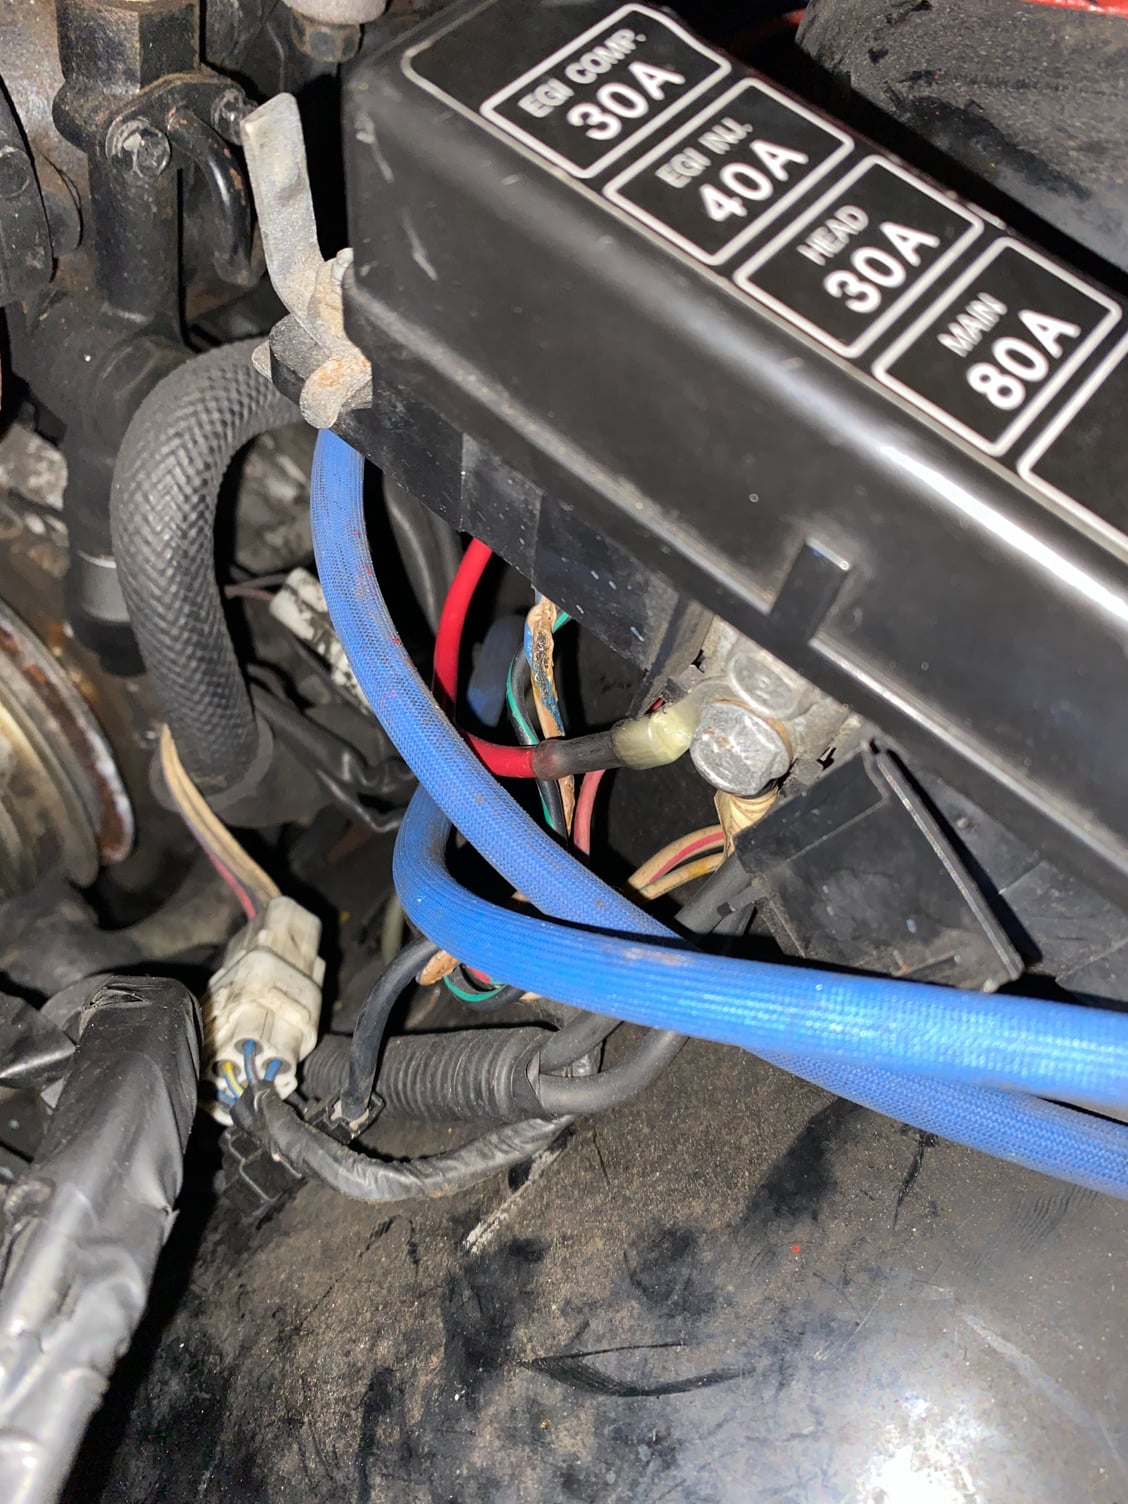 88 NA Electrical problems - RX7Club.com - Mazda RX7 Forum